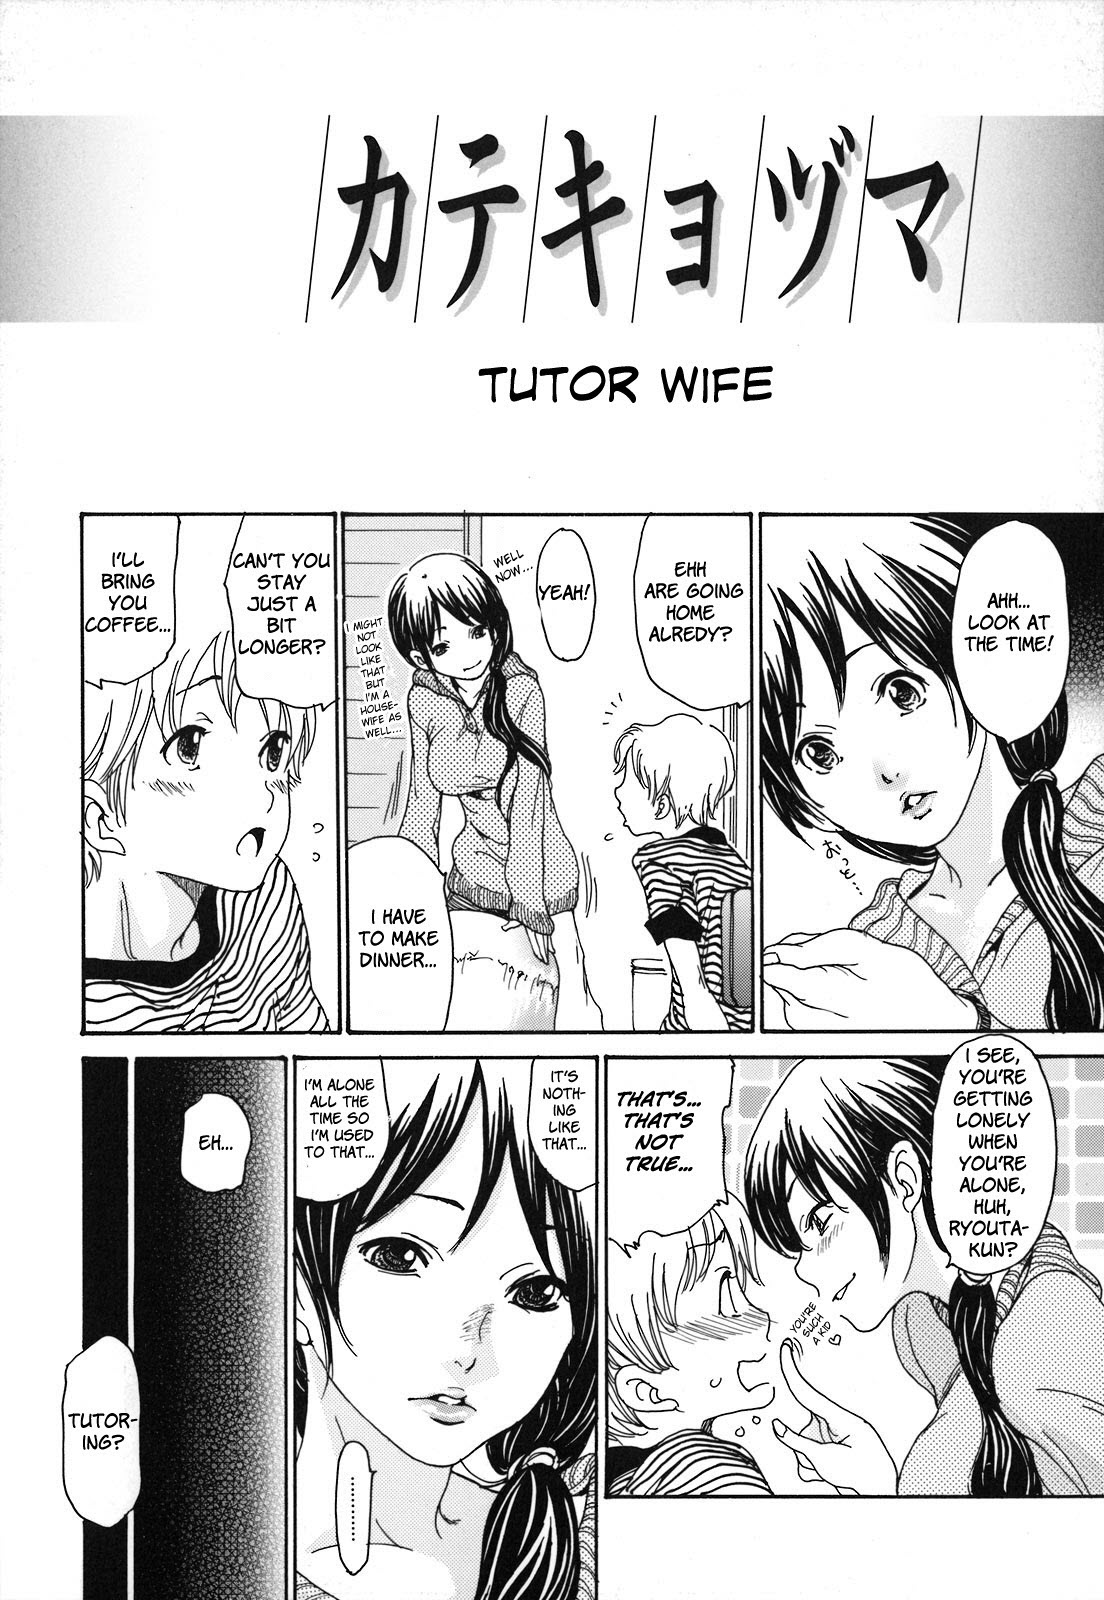 Tutor Wife by Aoi Hitori Hentai Comic